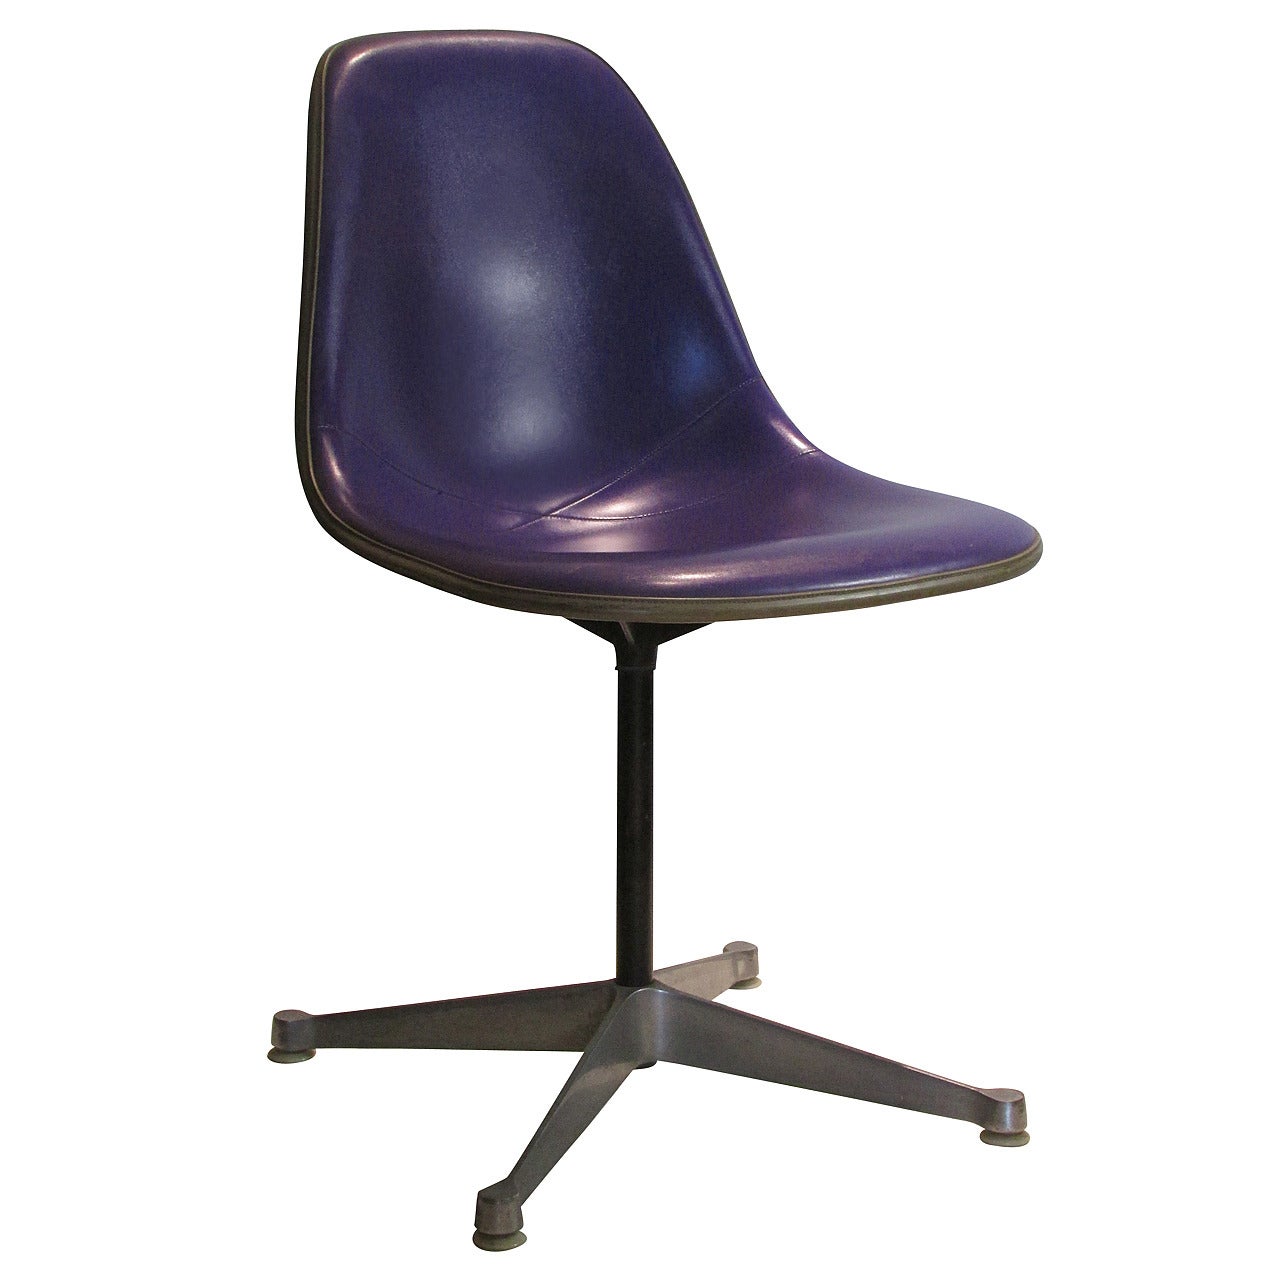 Eames Swivel Chair in Alexander Girard Purple Naugahyde